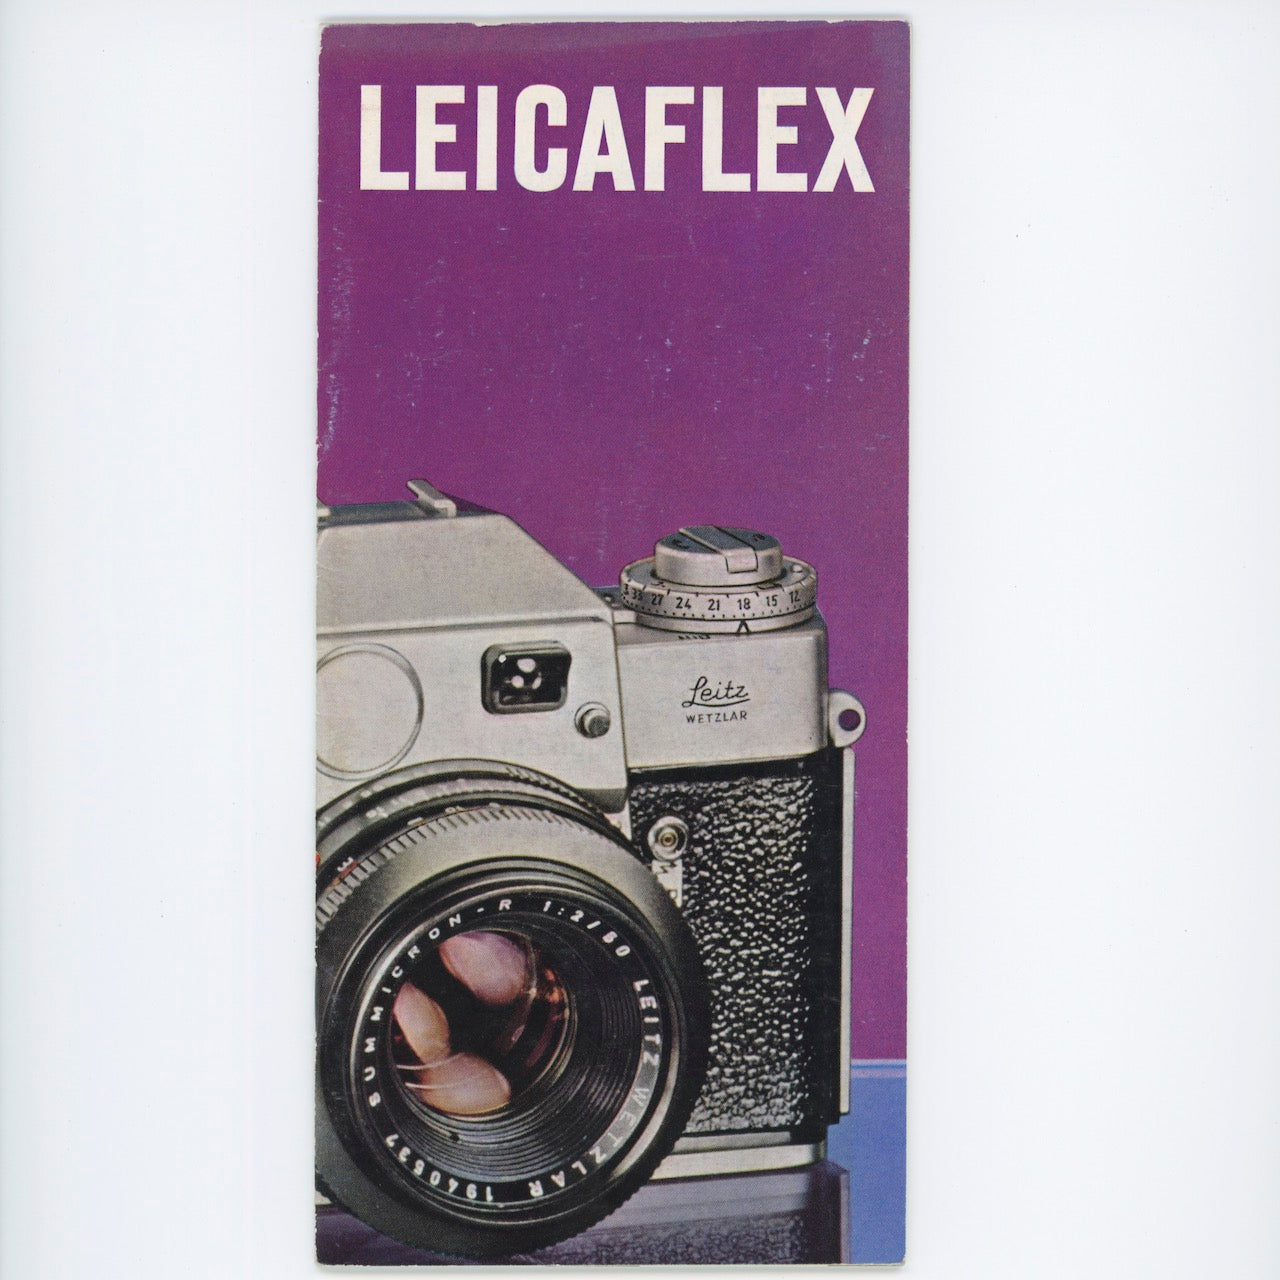 Leicaflex Brochure